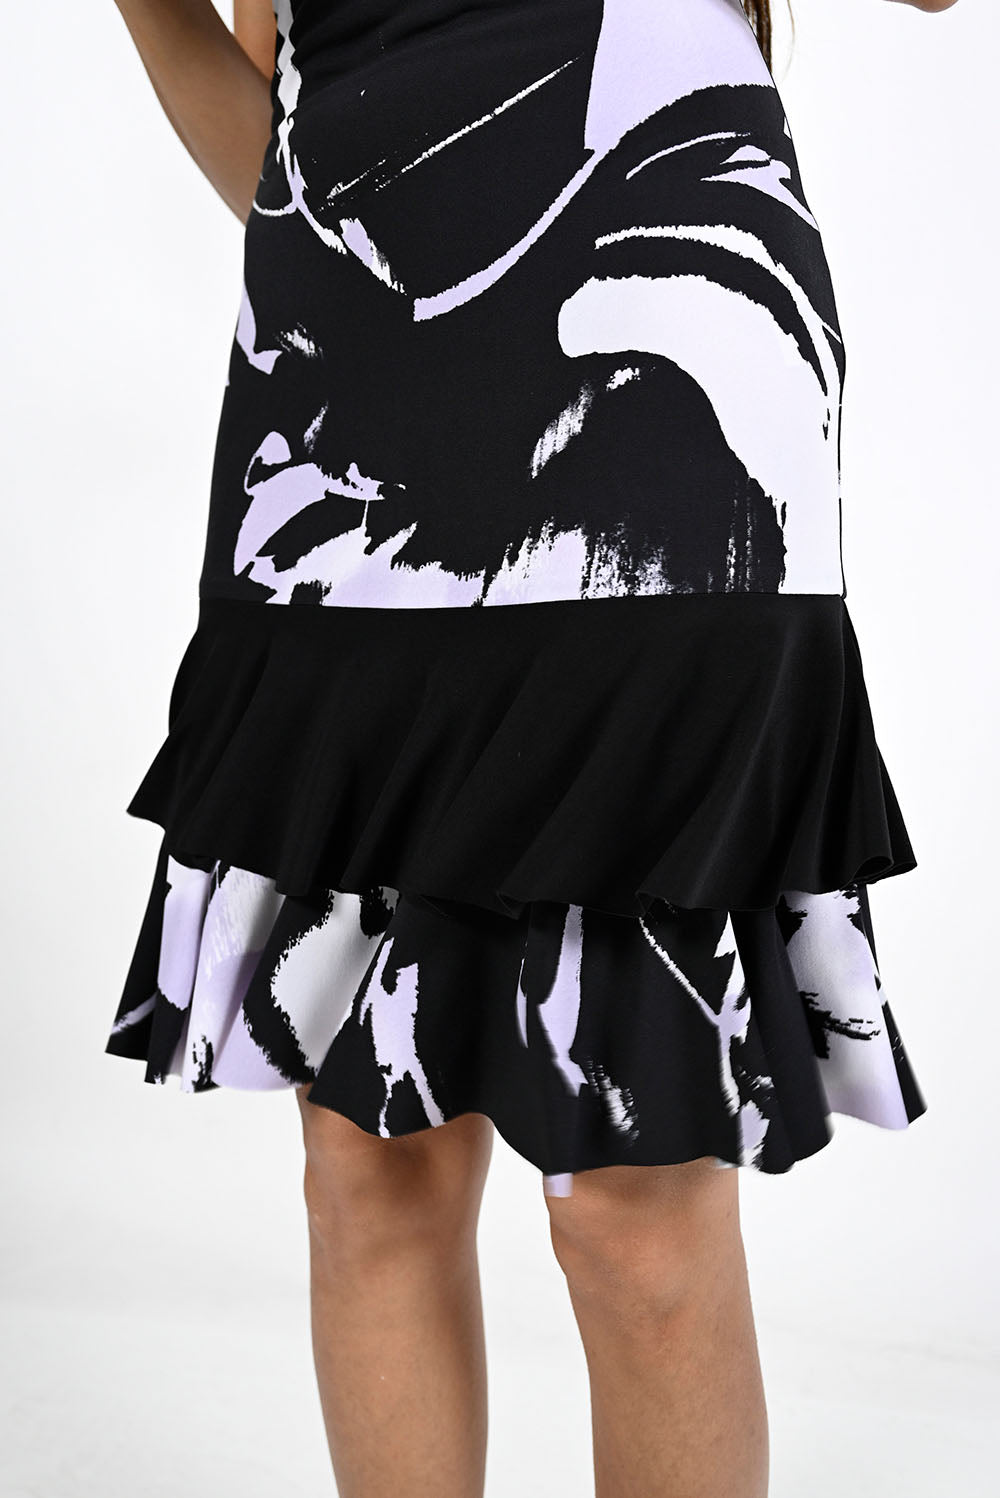 Frank Lyman Black-Lavender Knit Dress Style 226469